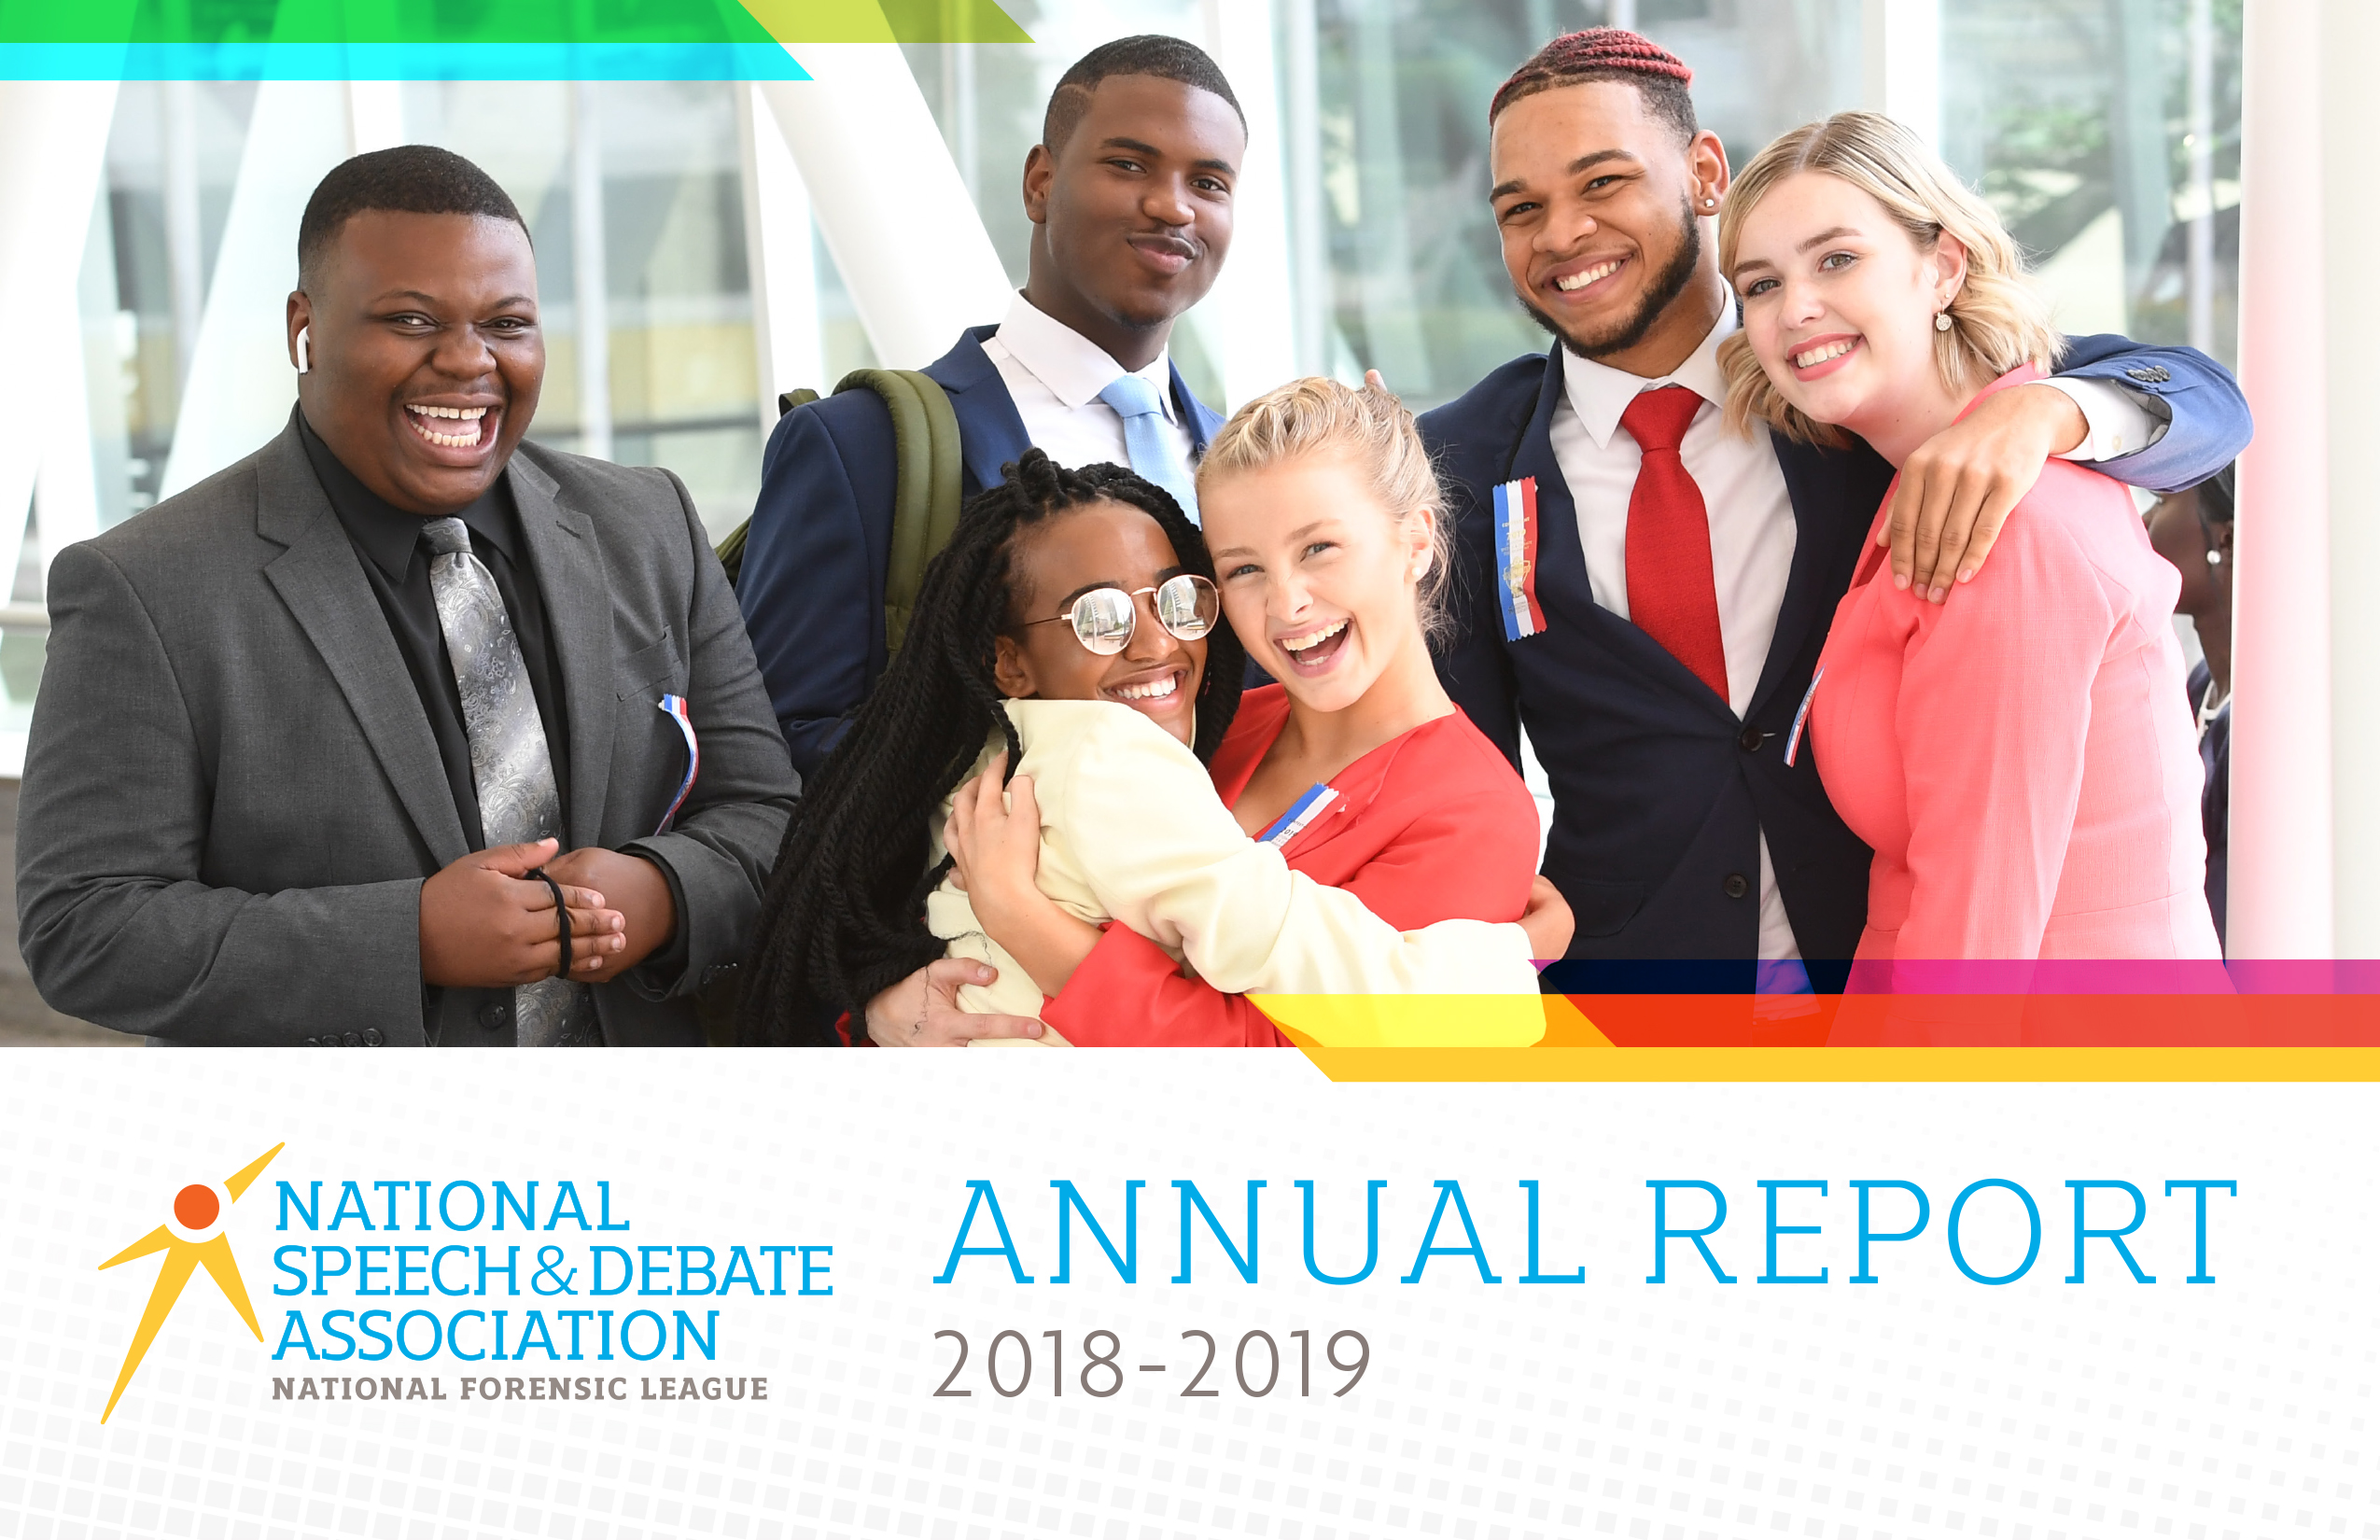 Annual Report - 2019